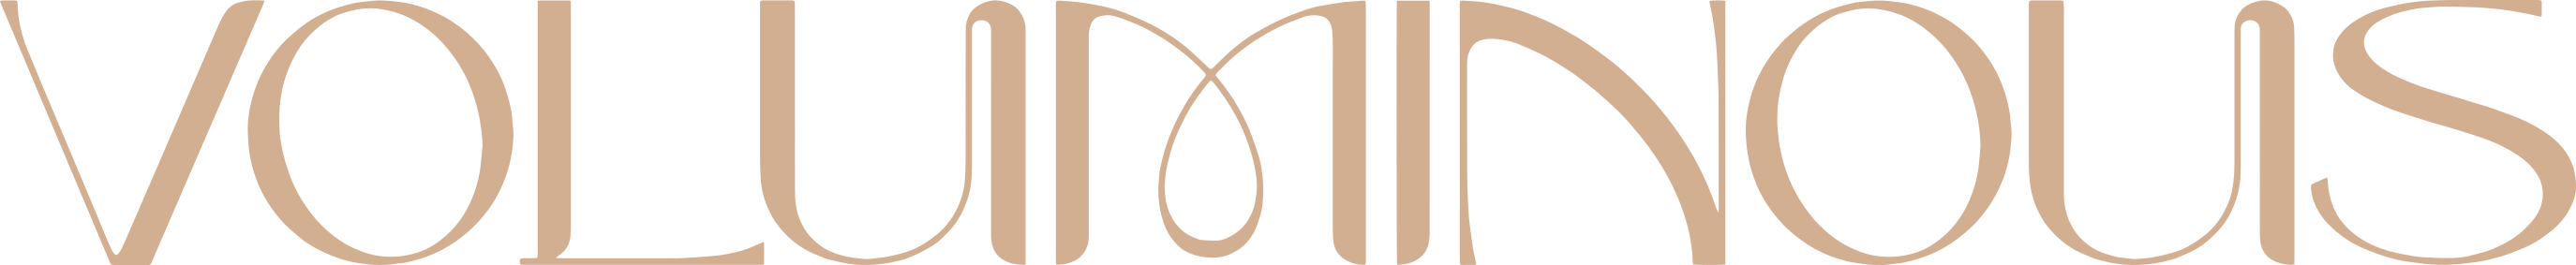 lesstress-logo-alt.png